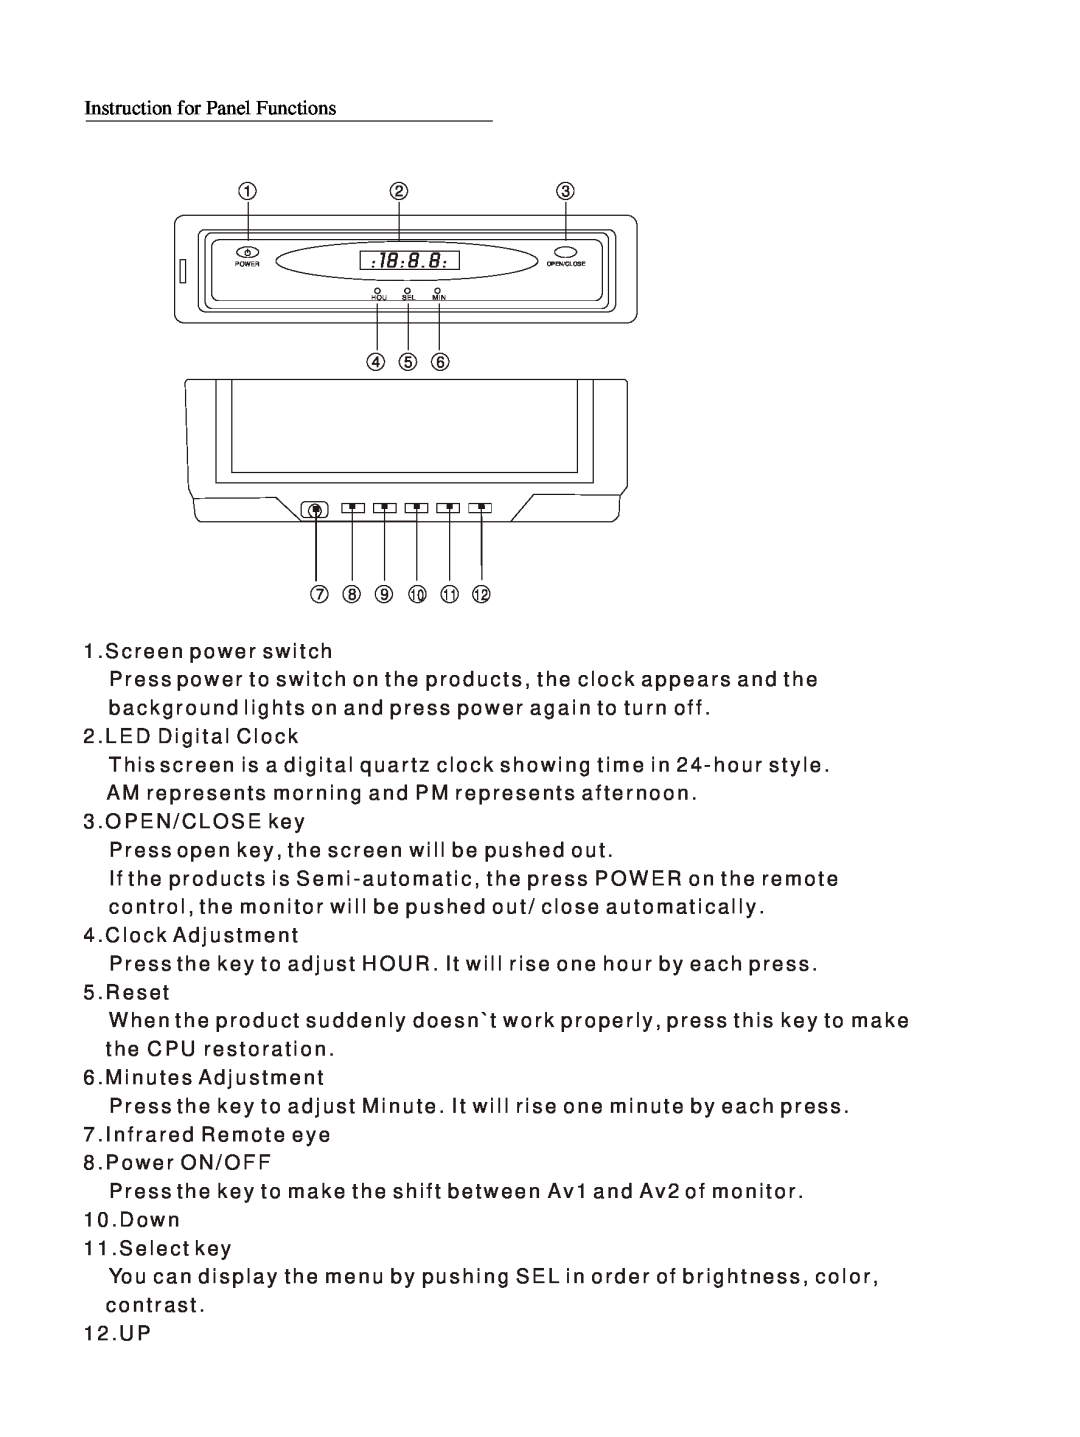 Radio Shack PLVIN60 instruction manual Instruction for Panel Functions 